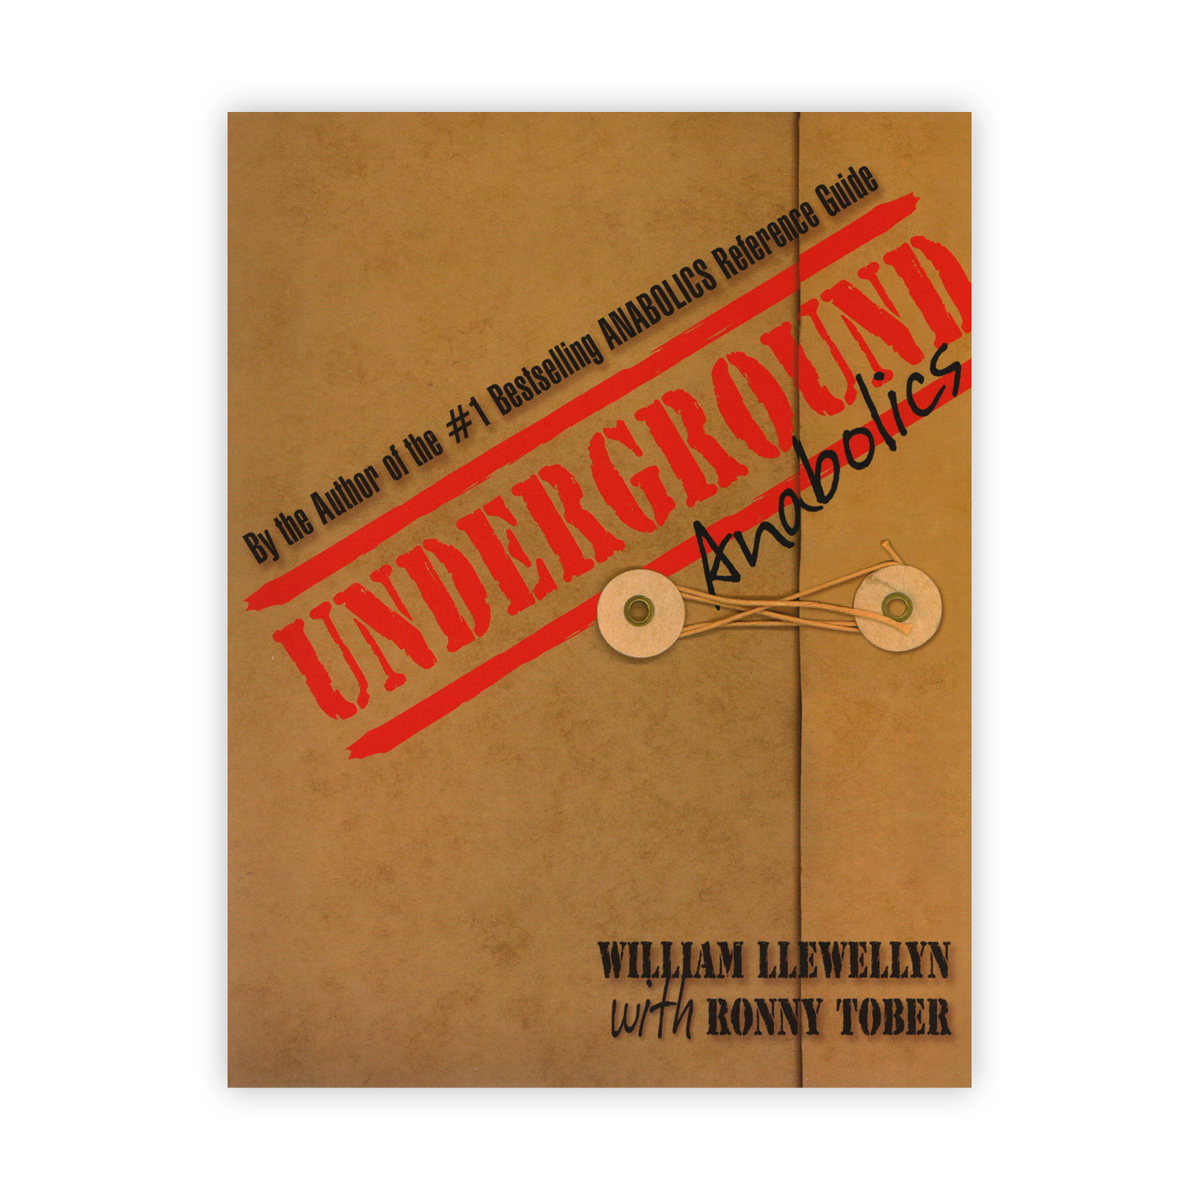 Underground Anabolics by William Llewellyn